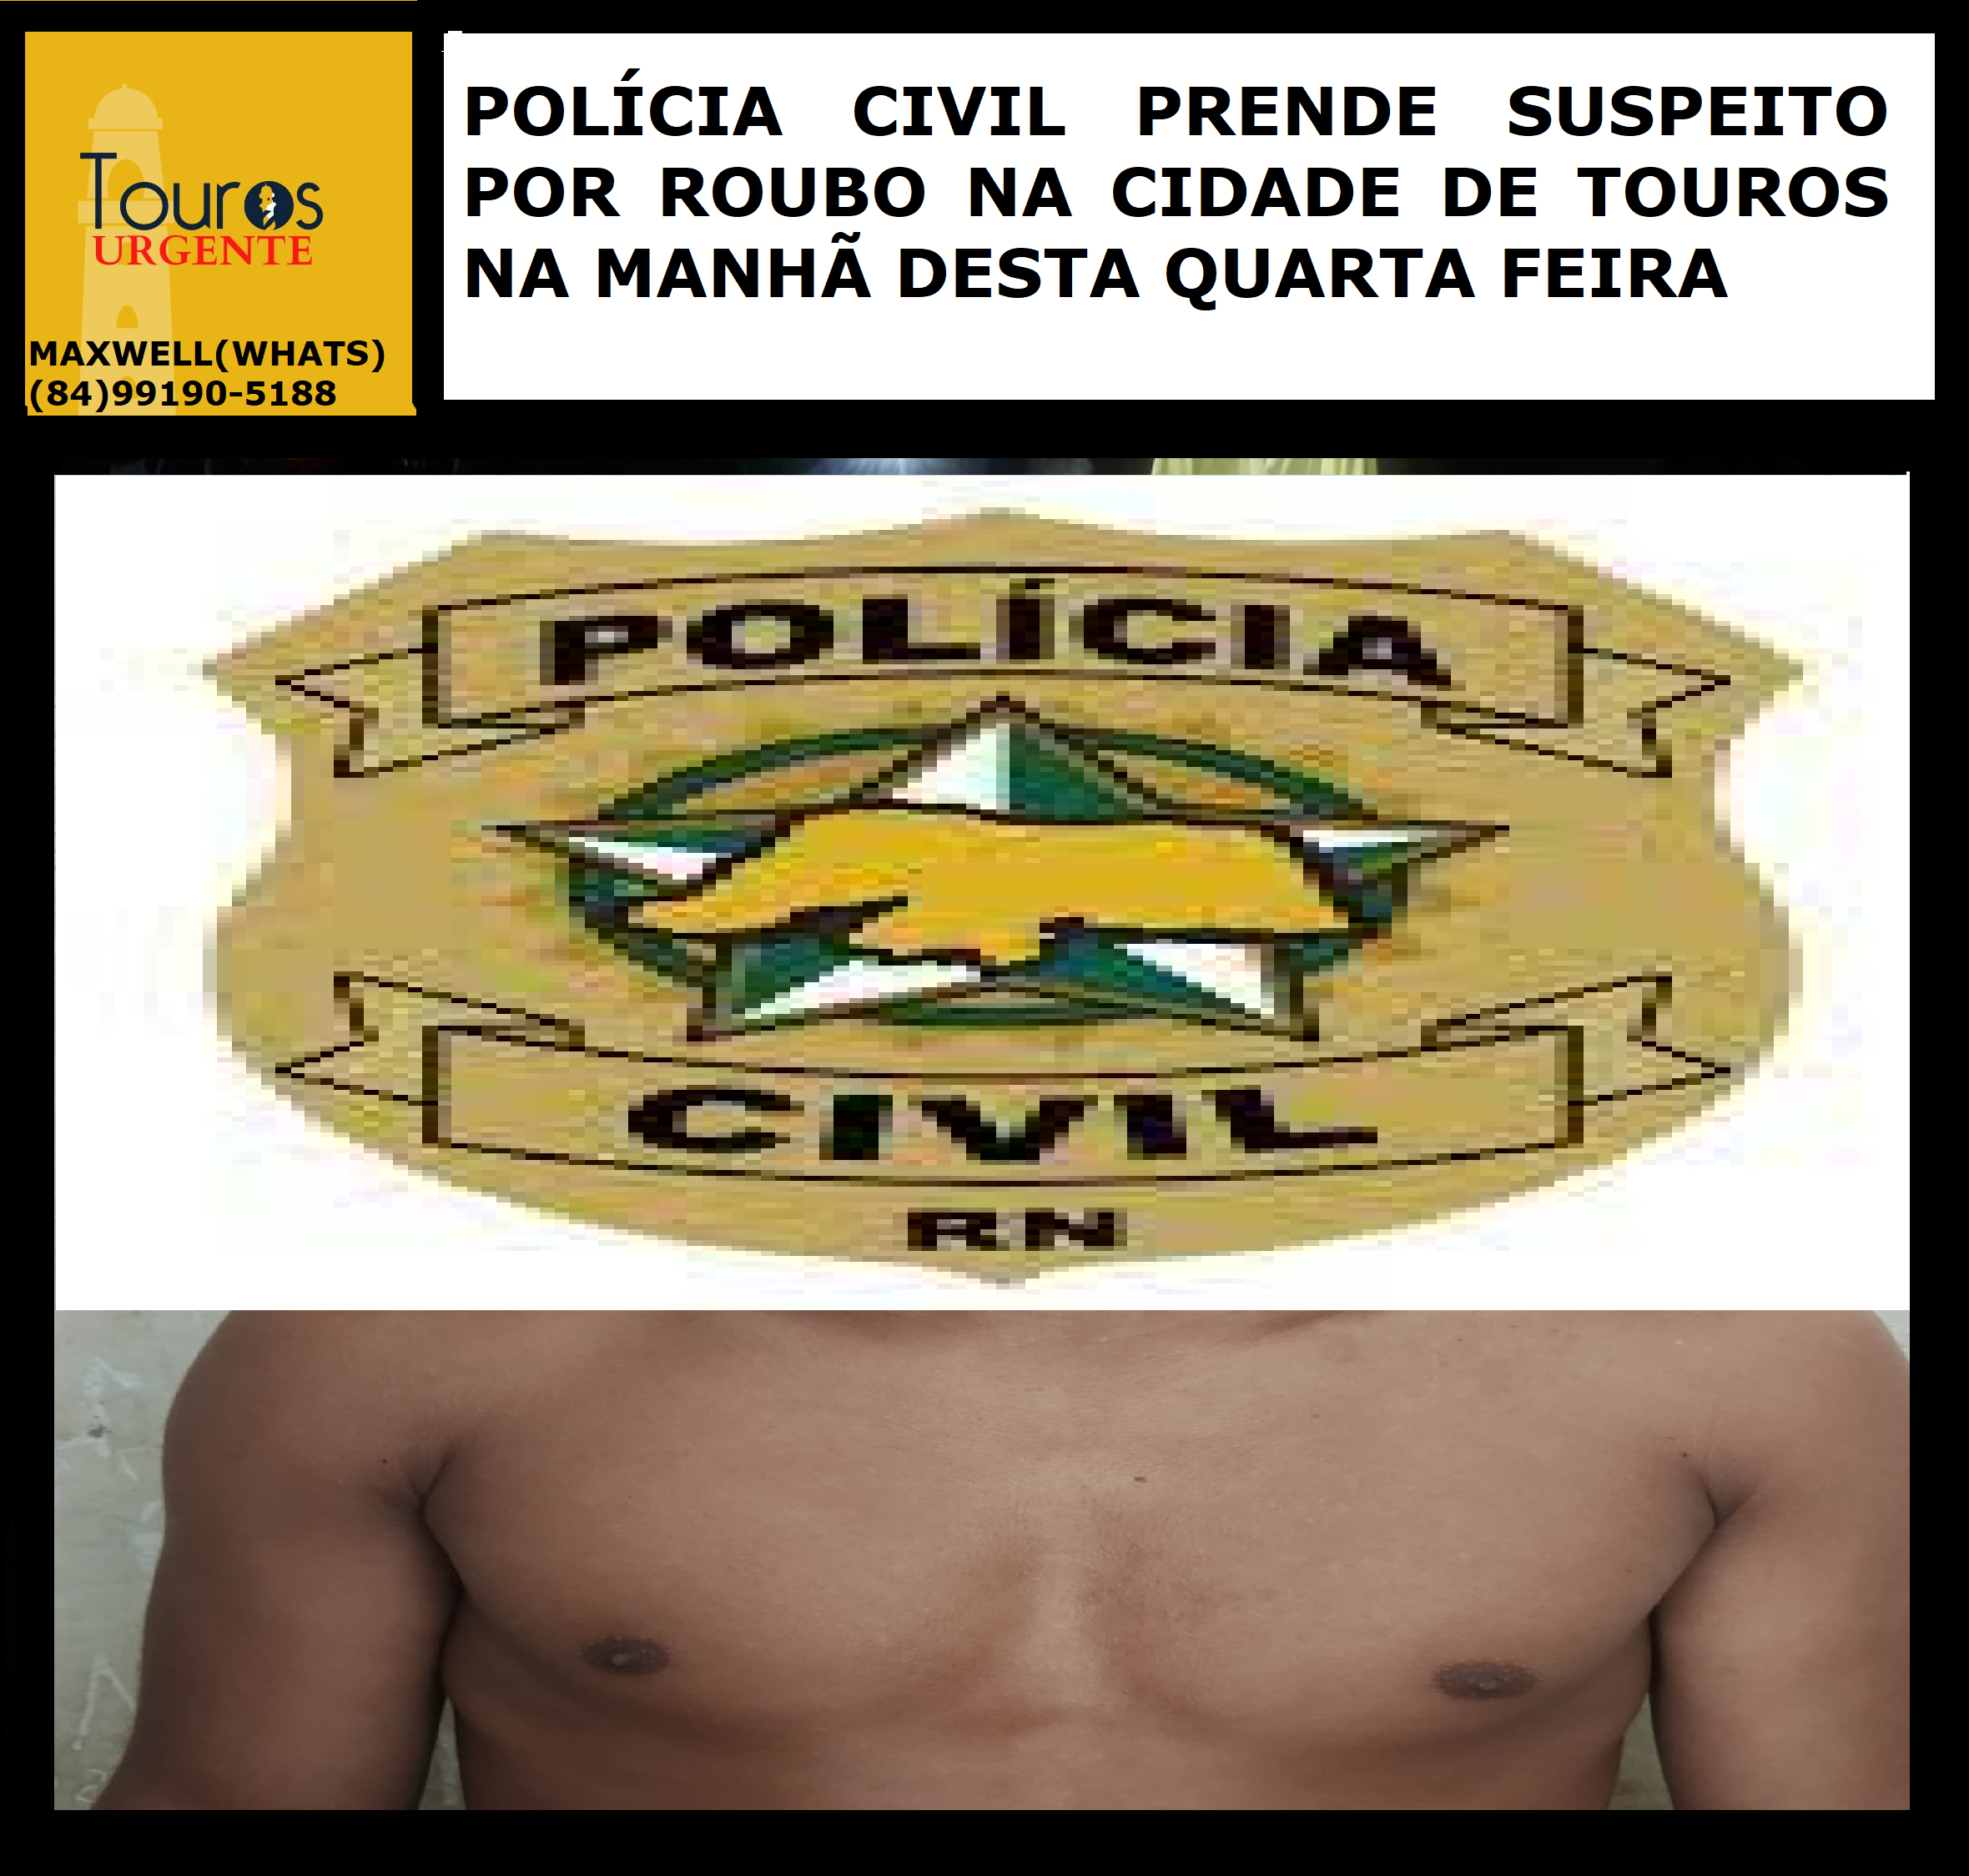 ​POLÍCIA CIVIL PRENDE SUSPEITO POR ROUBO NA CIDADE DE TOUROS NA MANHÃ